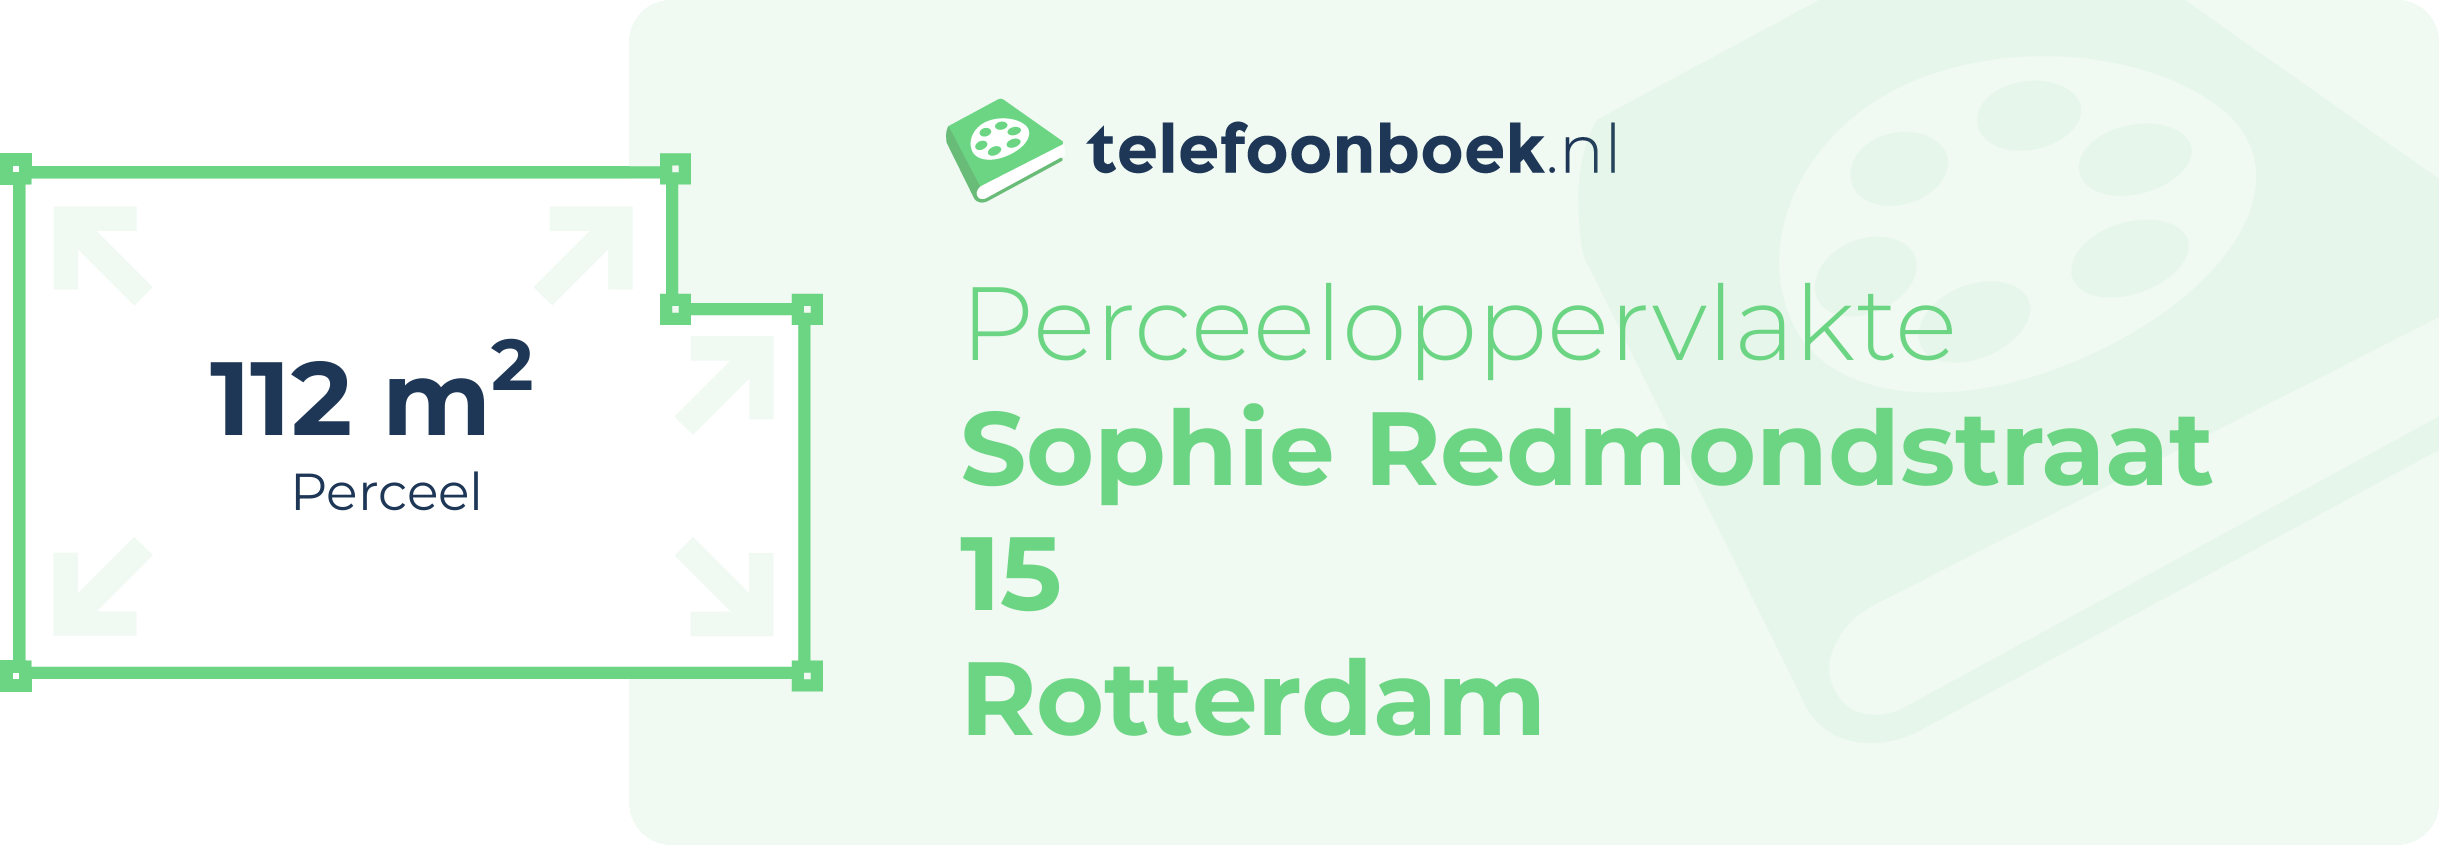 Perceeloppervlakte Sophie Redmondstraat 15 Rotterdam